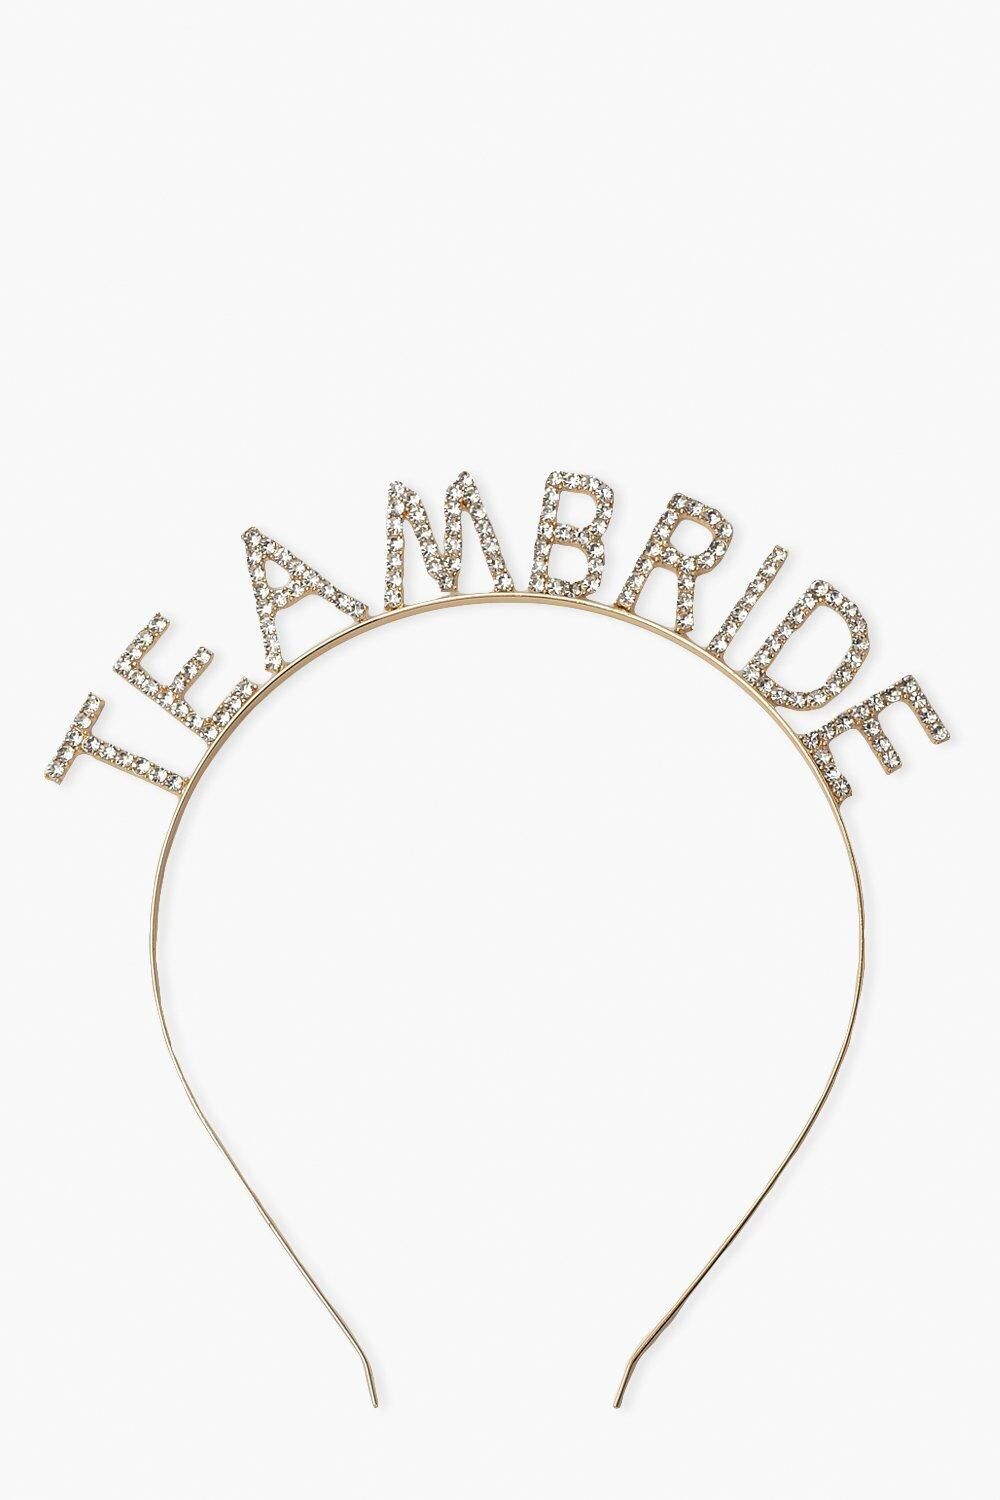 Boohoo Team Bride Diamante Headband- Gold  - Size: ONE SIZE